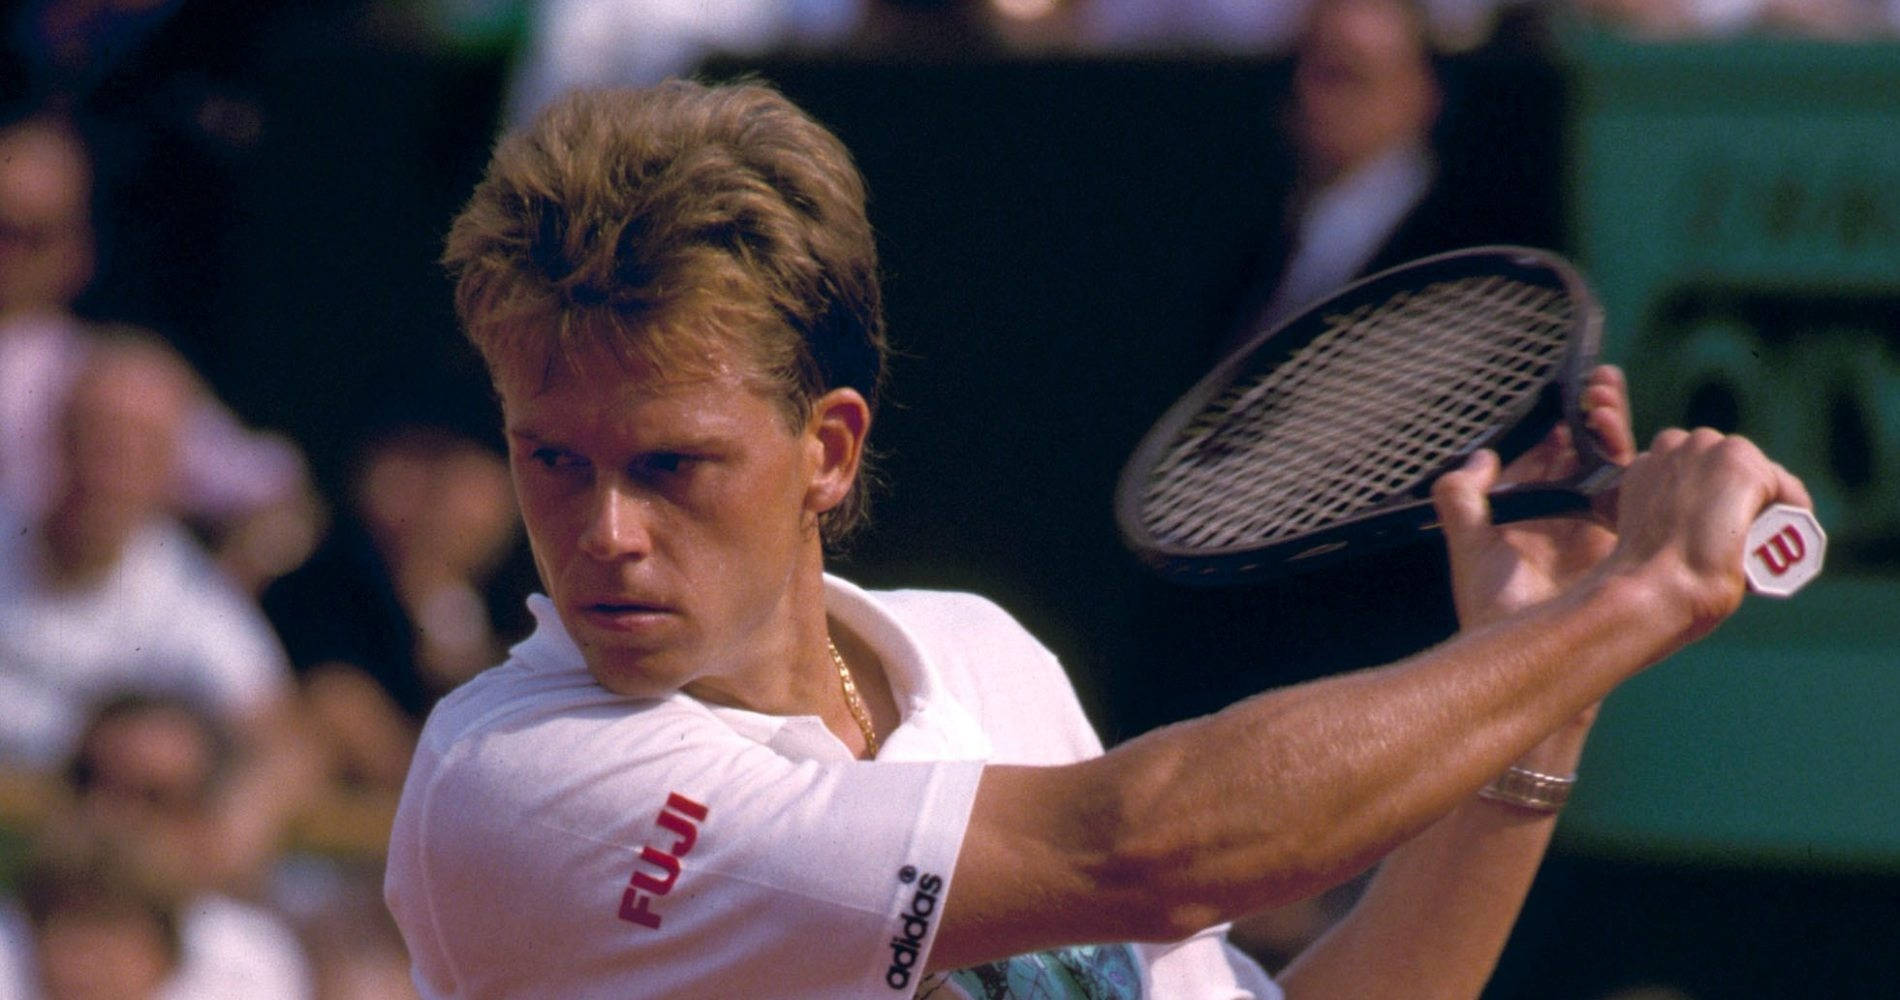 Stefan Edberg, the legendary tennis player intensely focused on the court. Wallpaper